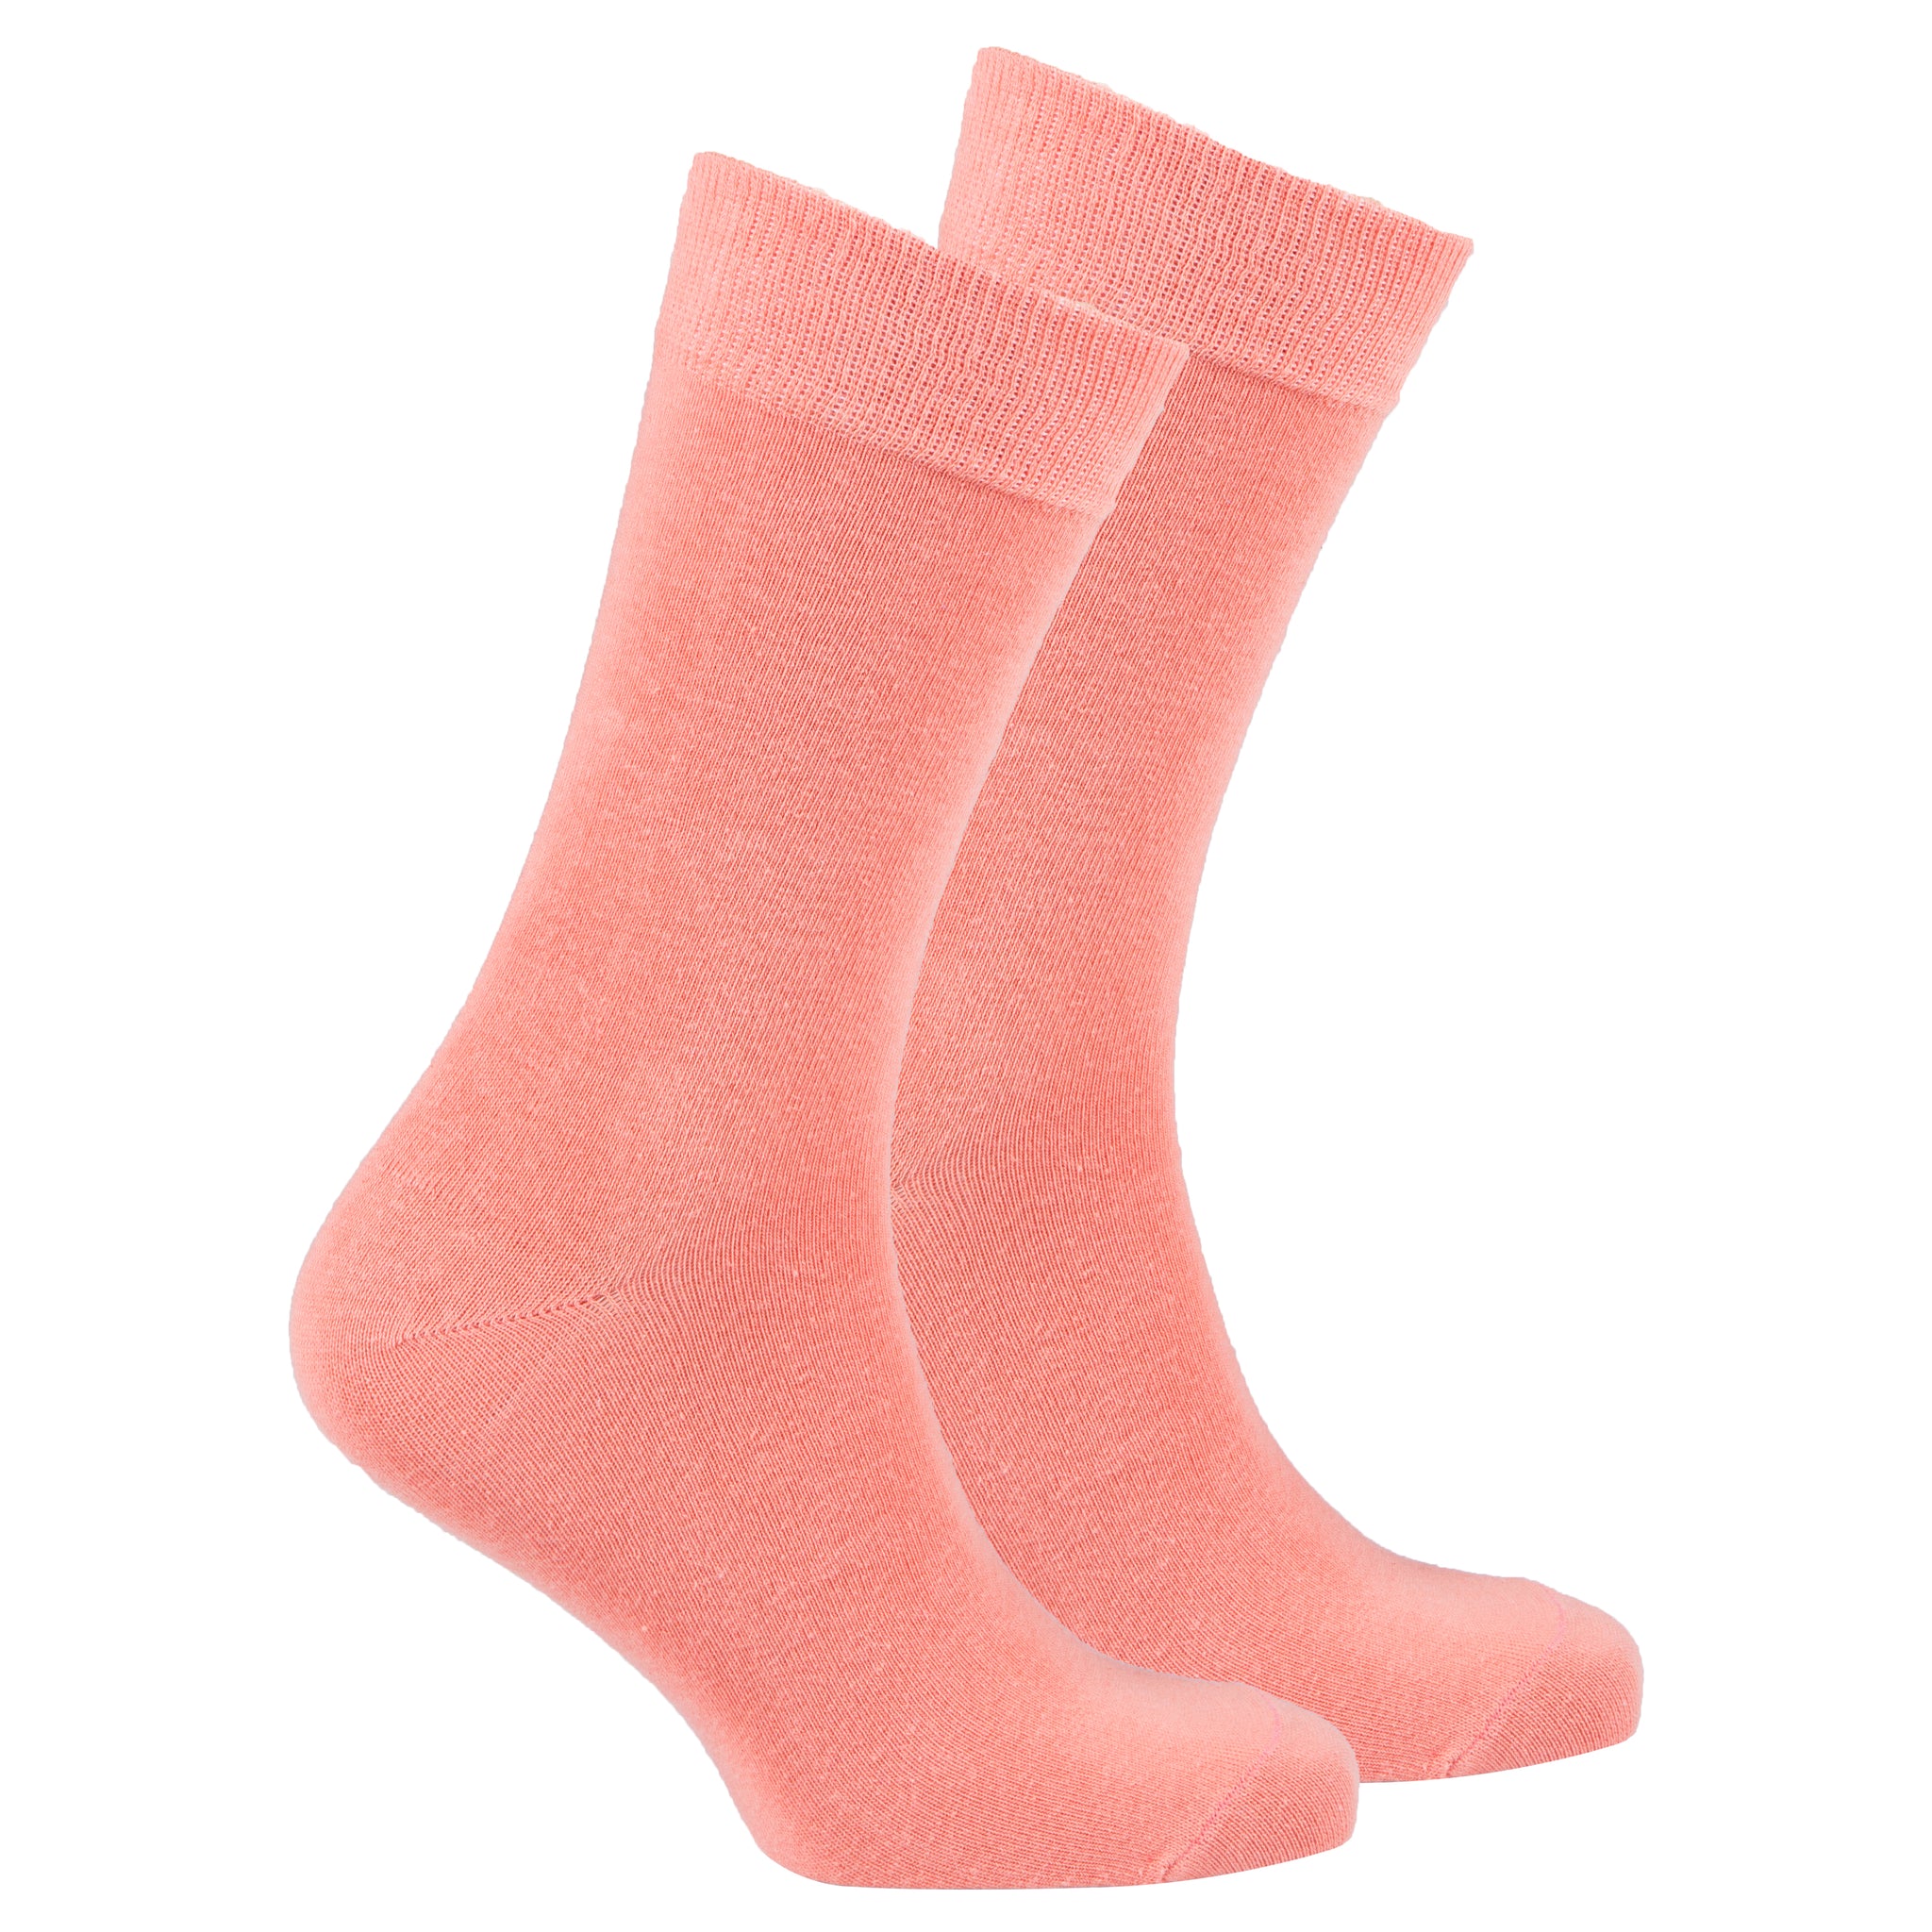 Men's Solid Coral Socks